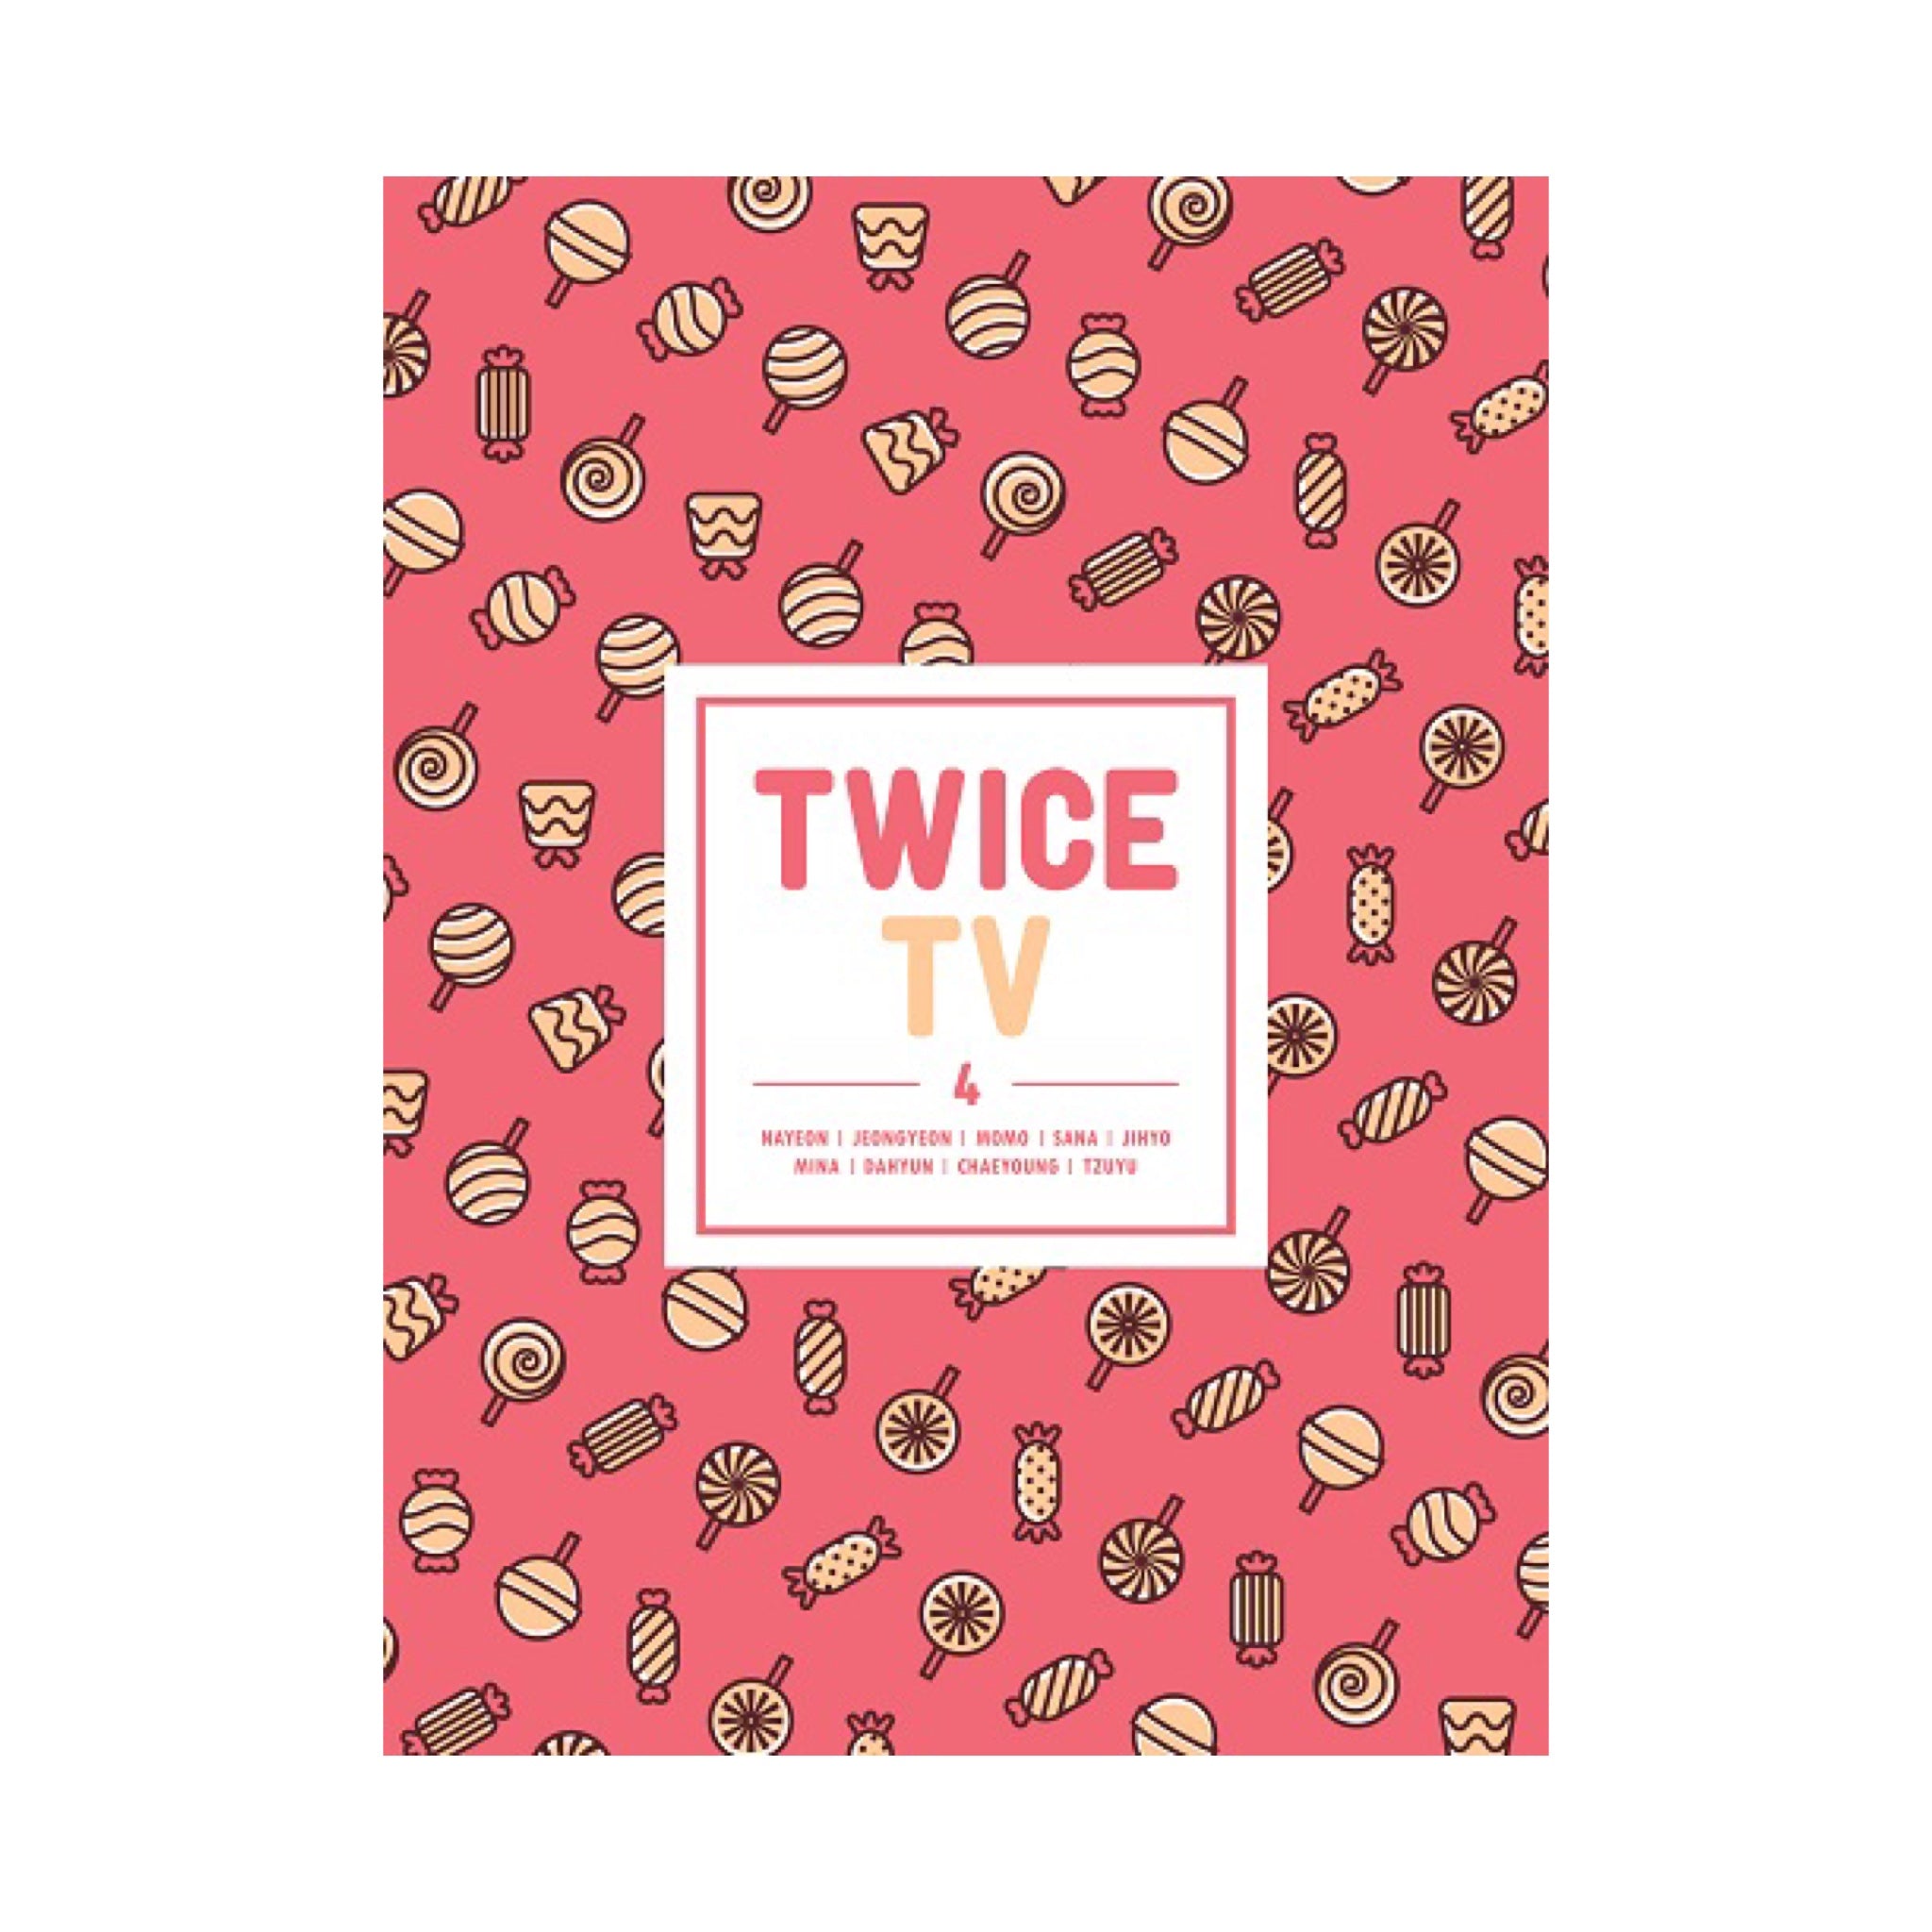 TWICE - TWICE TV4 DVD ✅